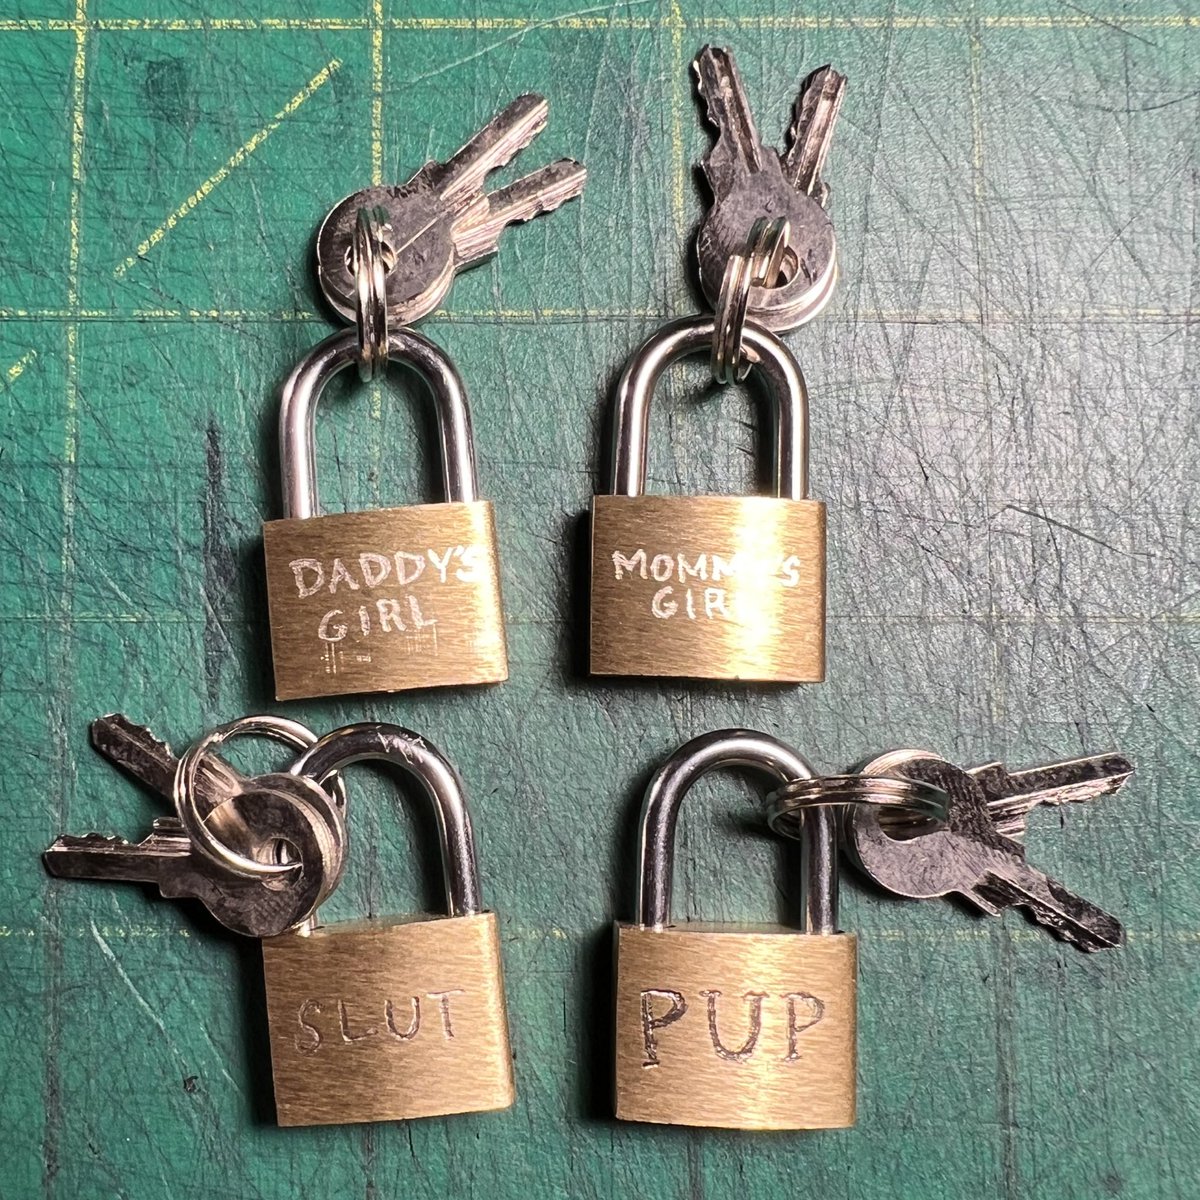 Small engraved locks are restocked